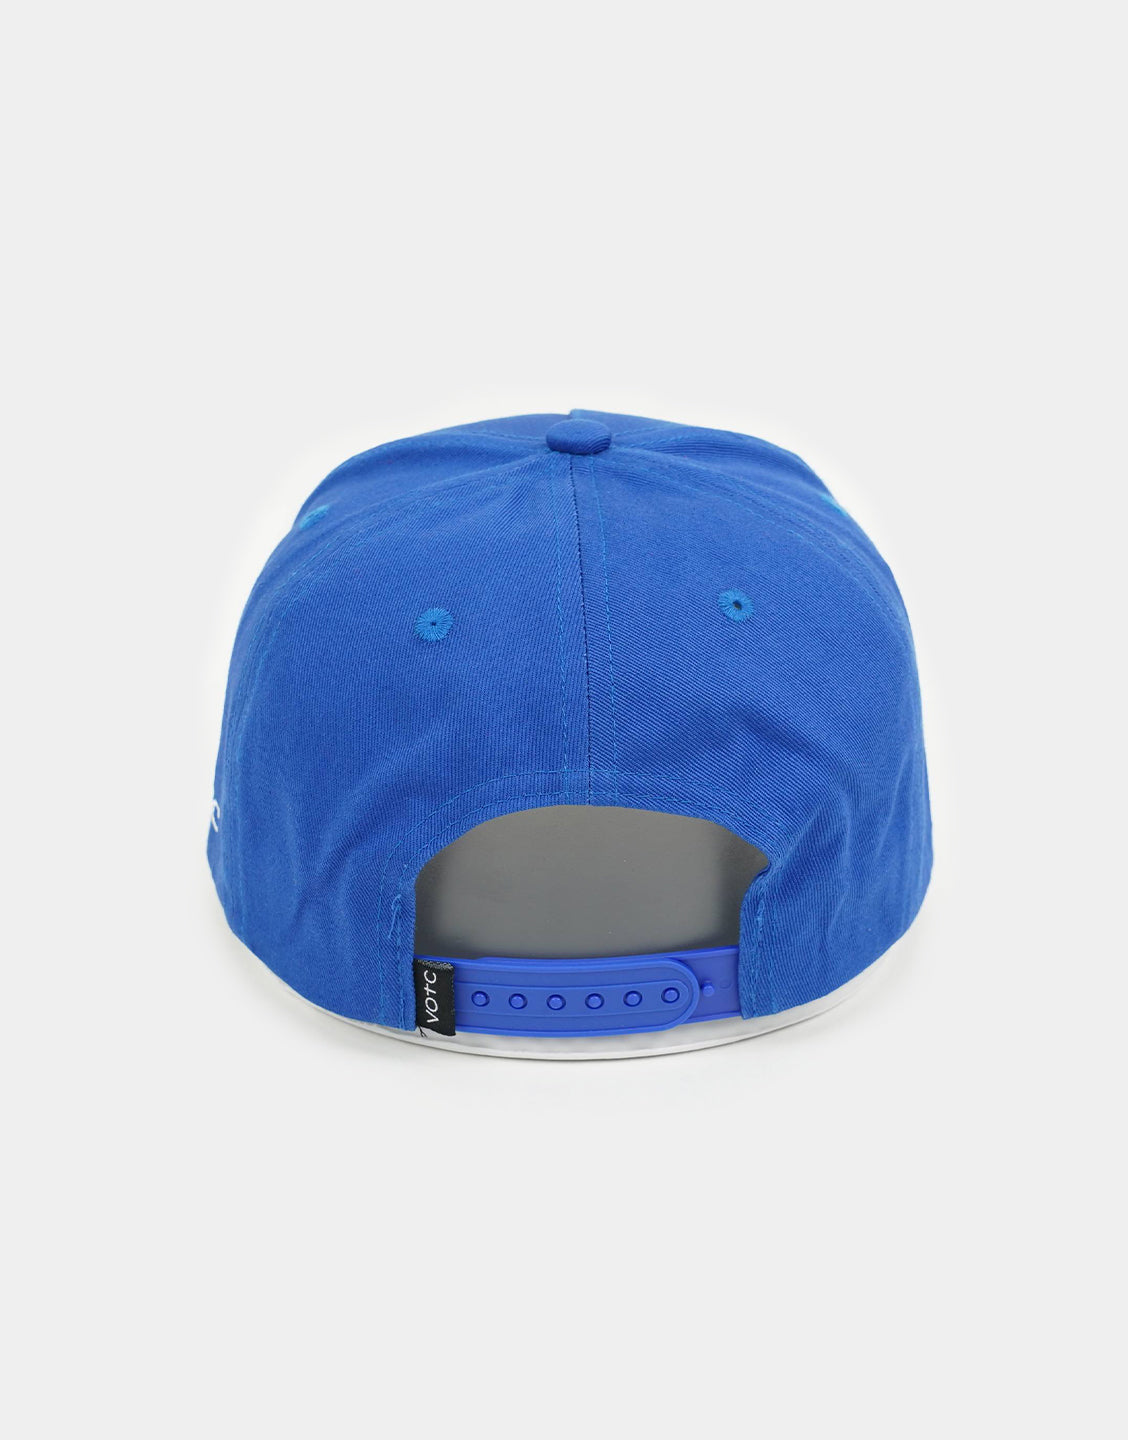 Trust God Premium Baseball Hat - Royal Blue - VOTC Clothing